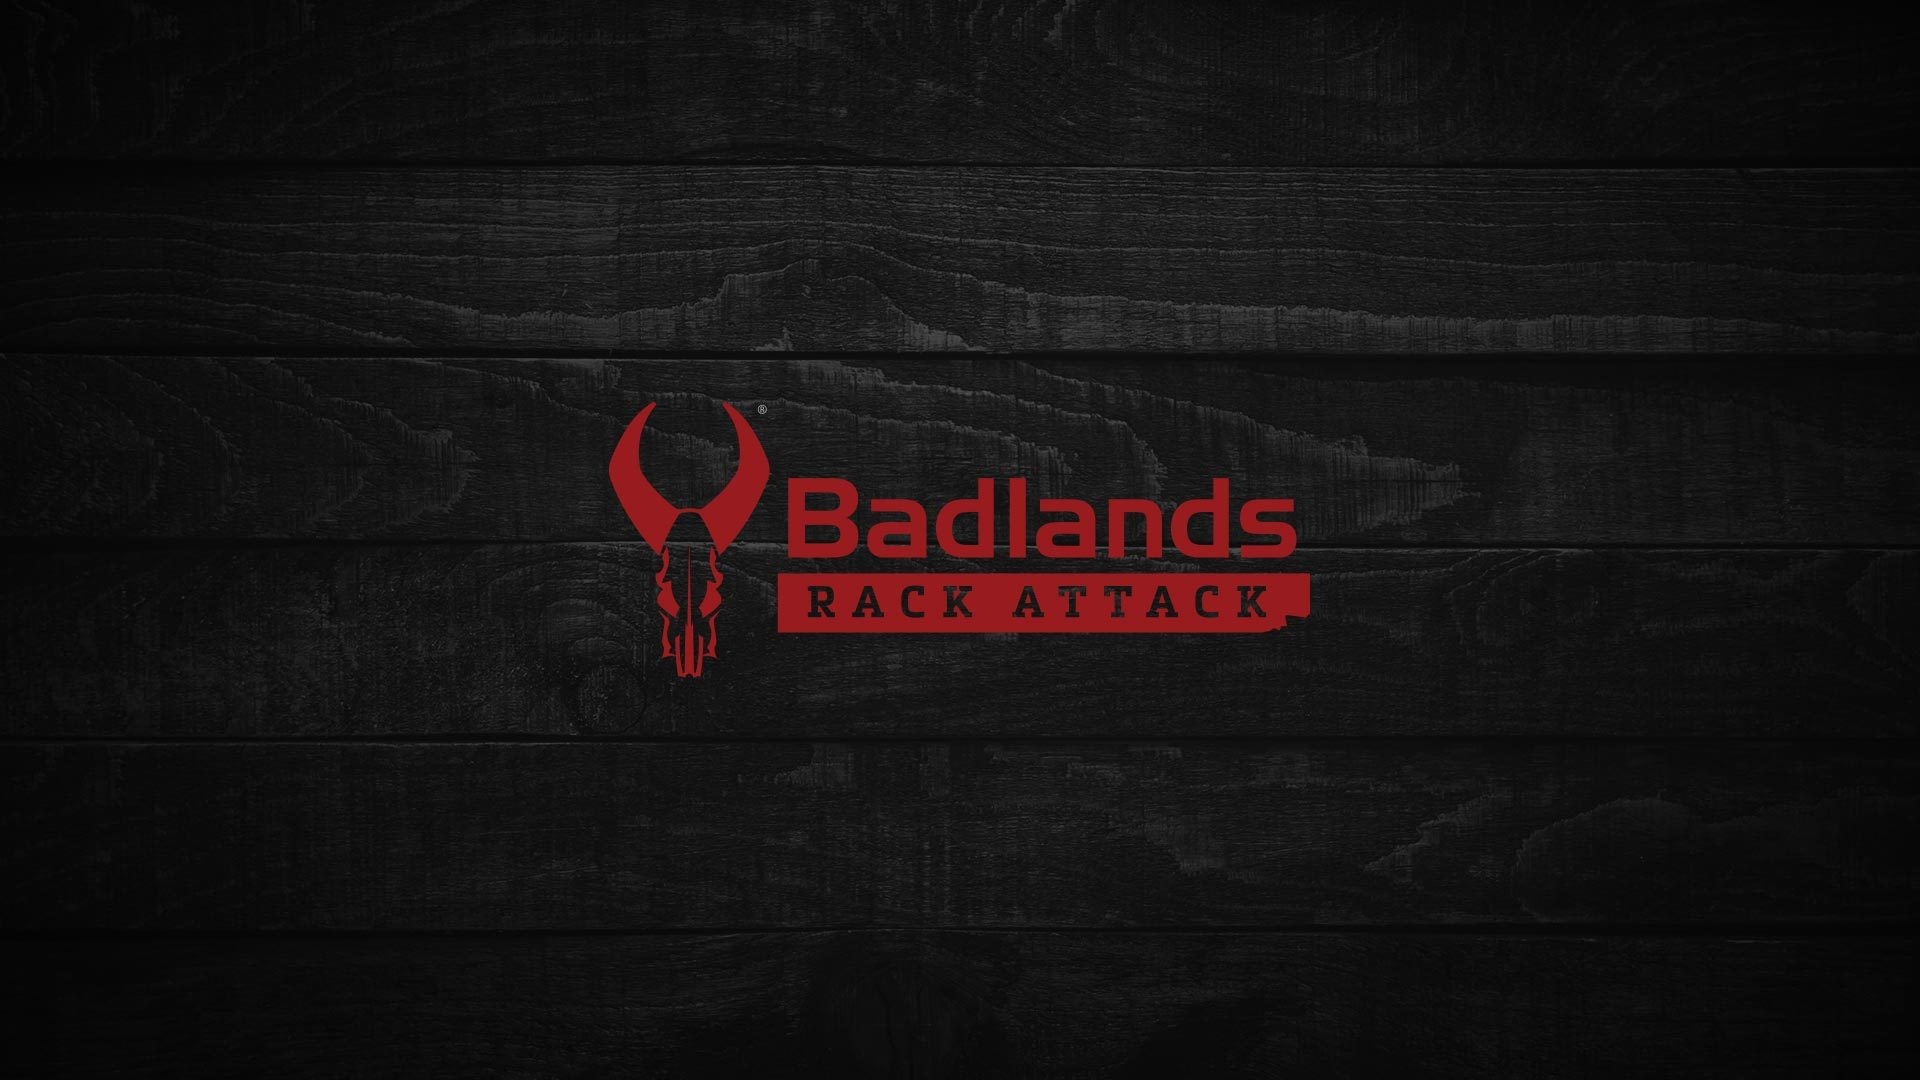 Badlands Rack Attack Season 1 Episode 6: 2019 Apparel and Air Travel Fun